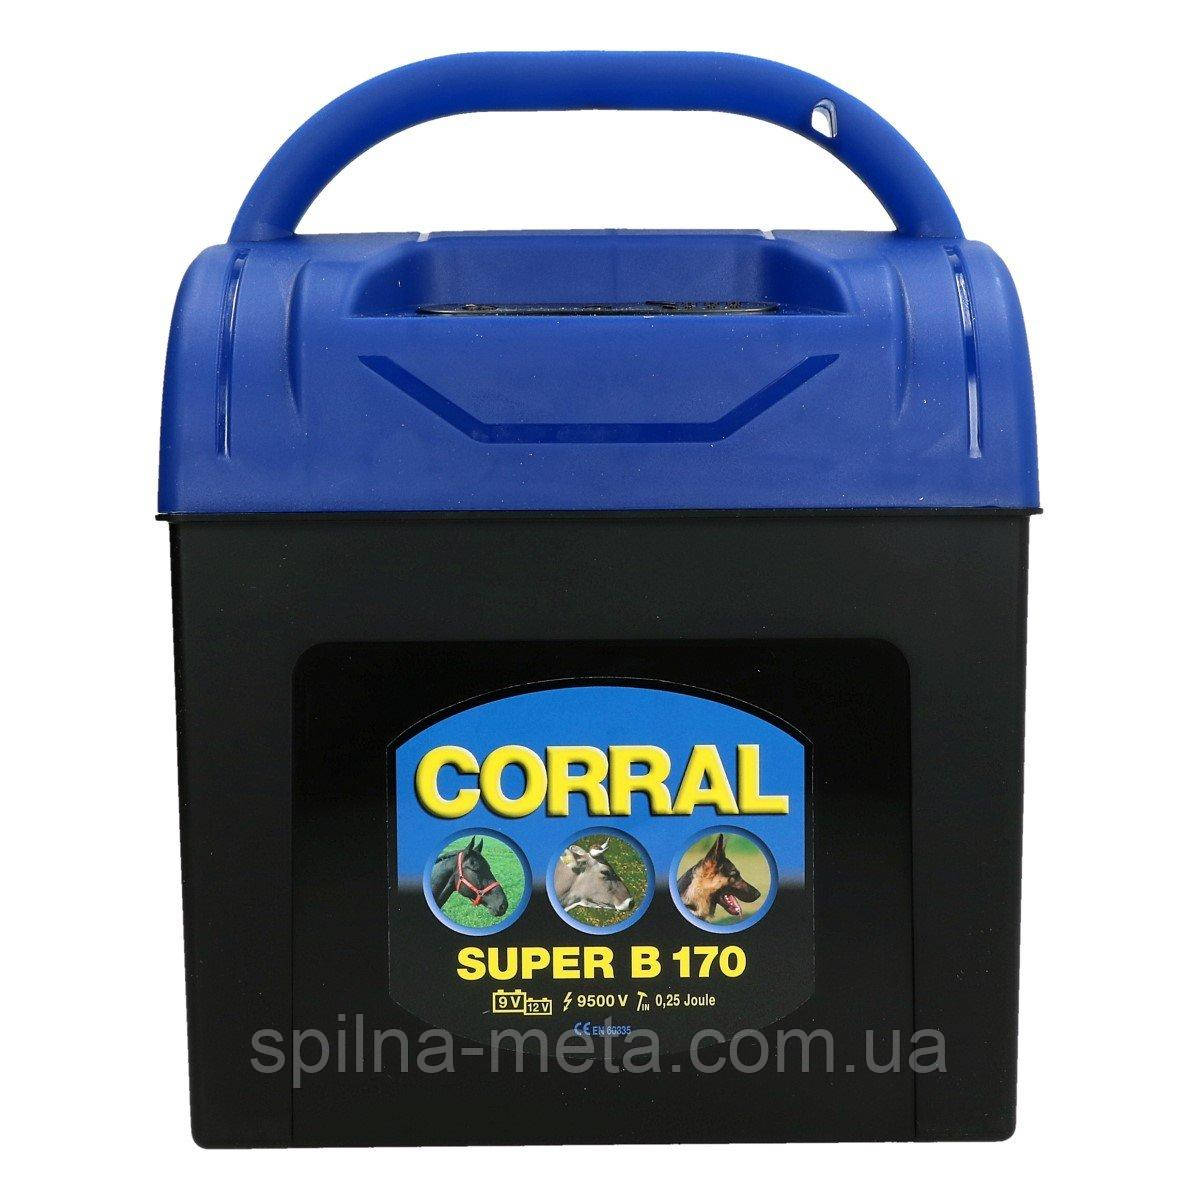 Електропастух Corral Super B170, 0.32 Дж, Німеччина